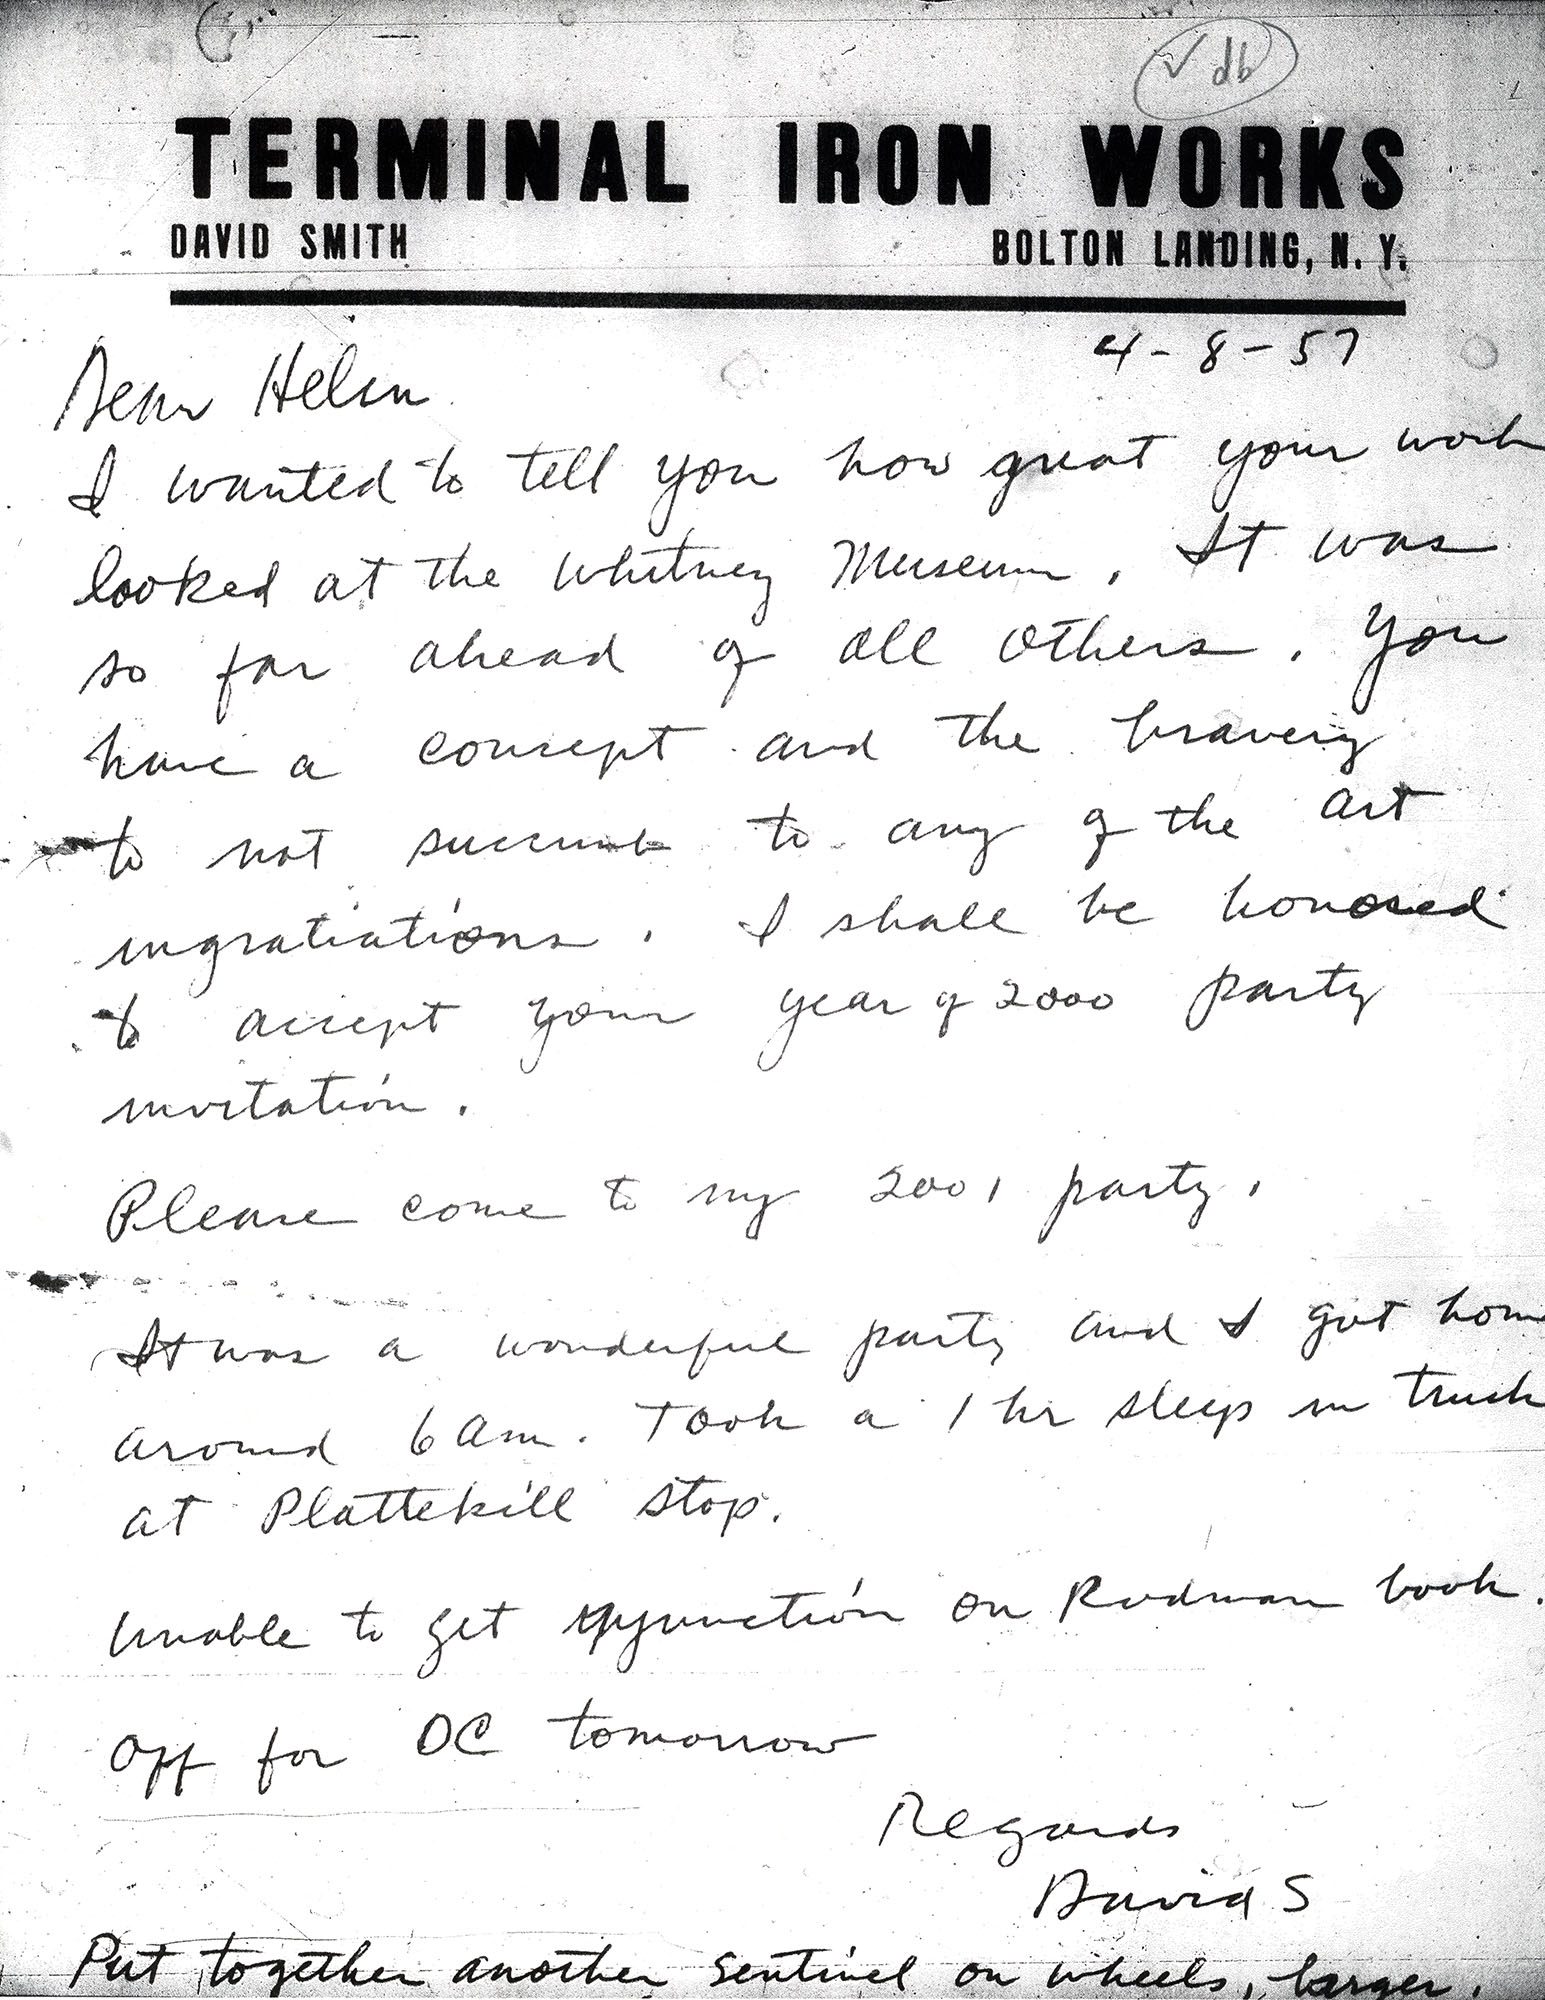 A handwritten letter on Terminal Iron Works letterhead